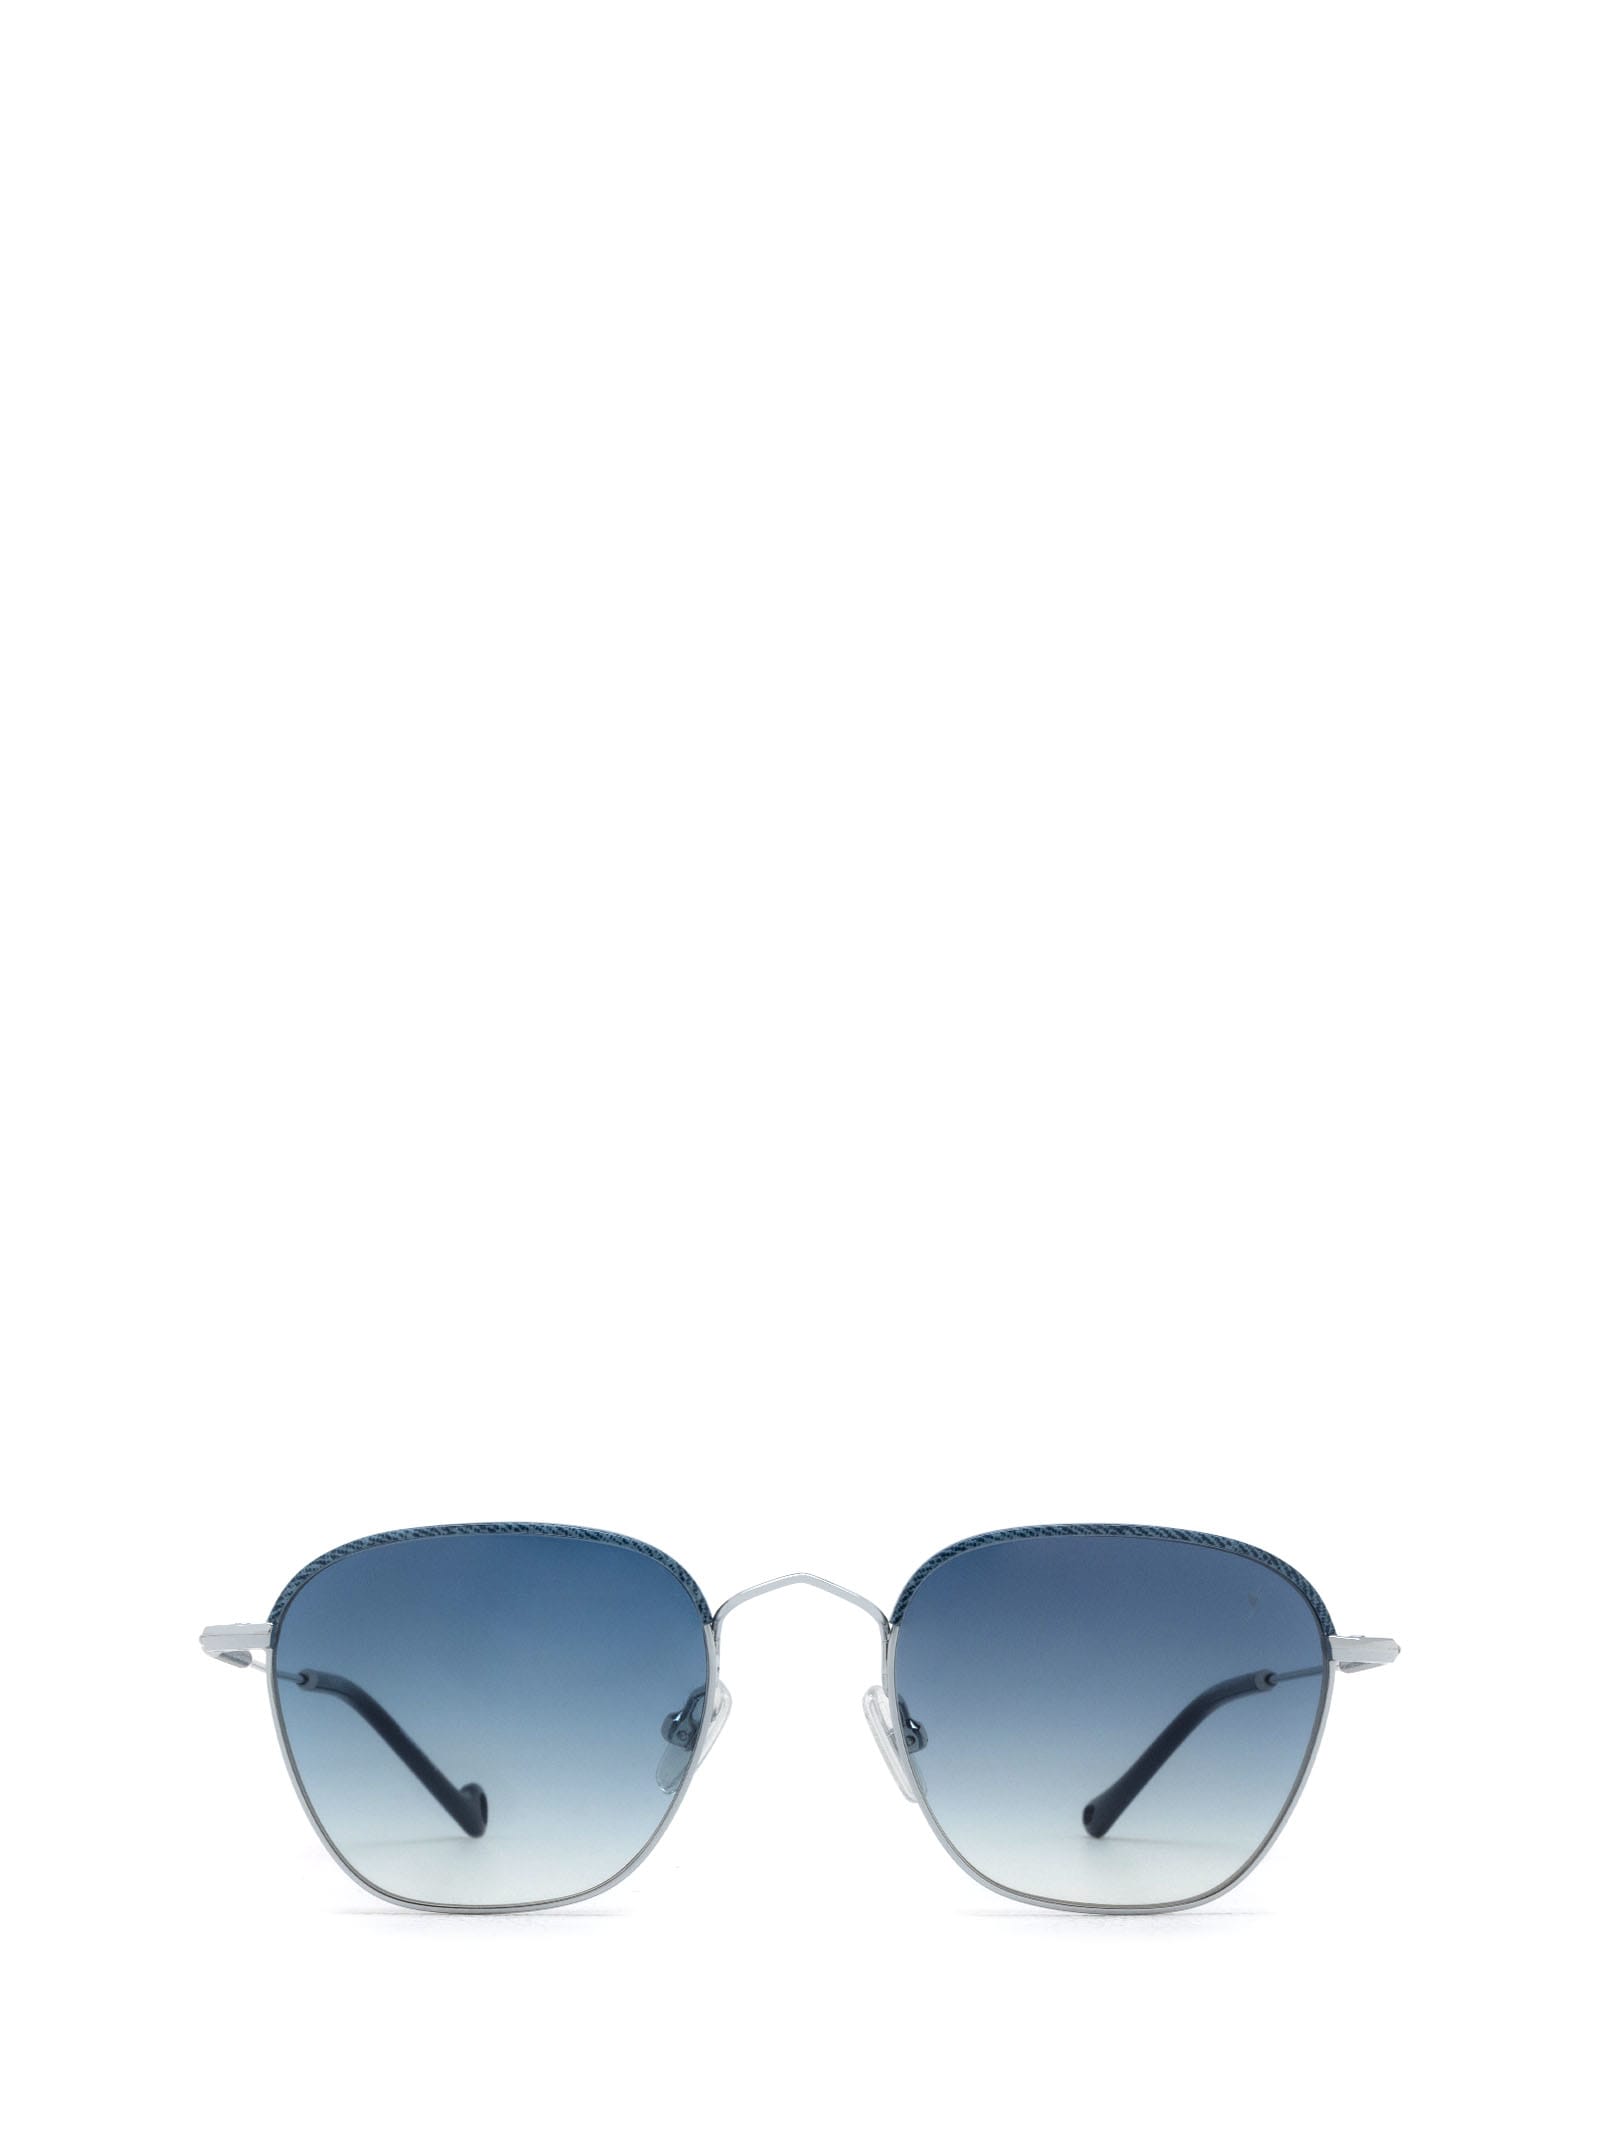 Atacama Jeans Sunglasses